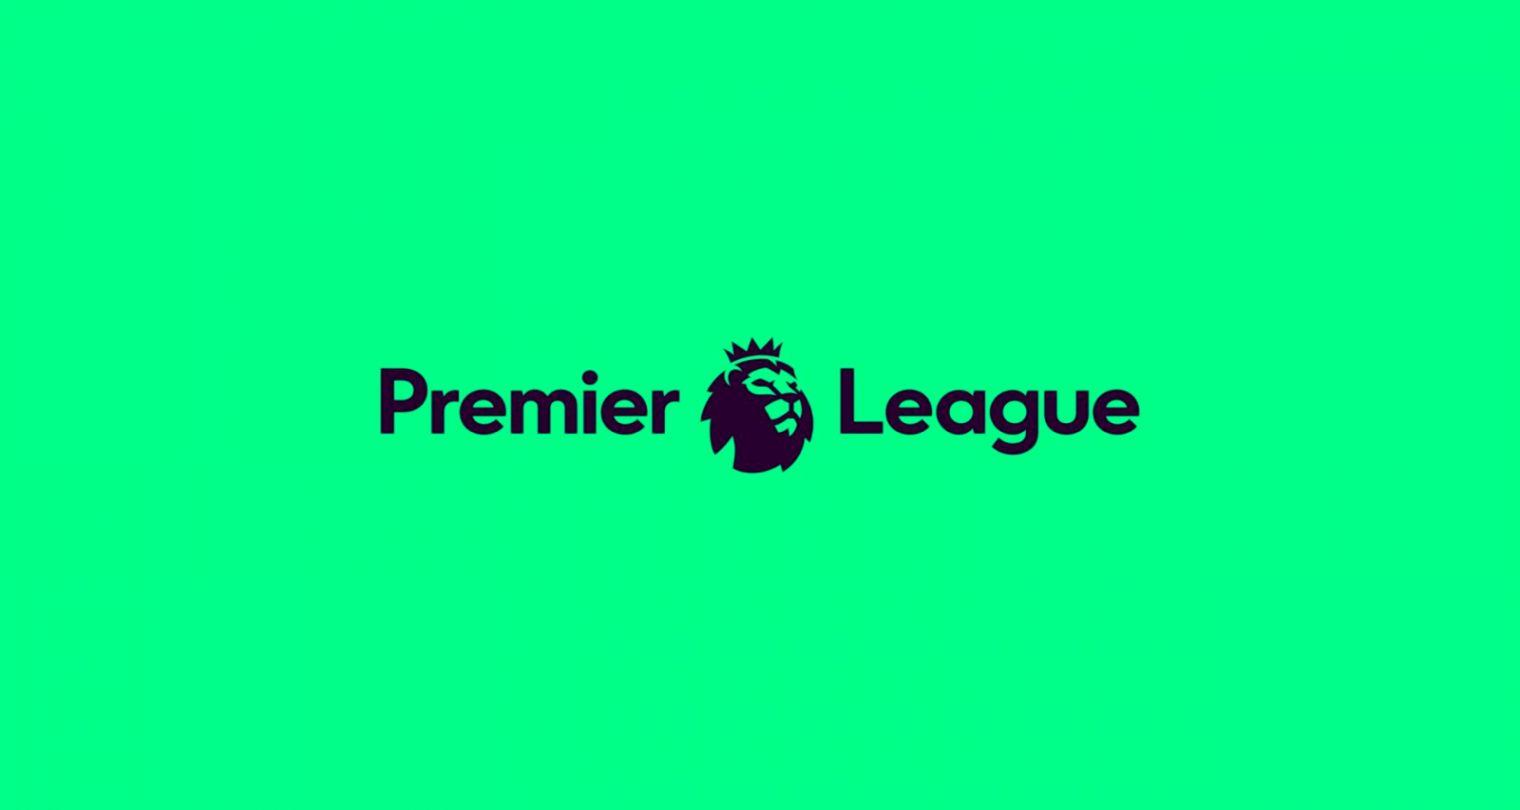 Barclays Premier League Logo HD Wallpaper 1080P. Wallpaper